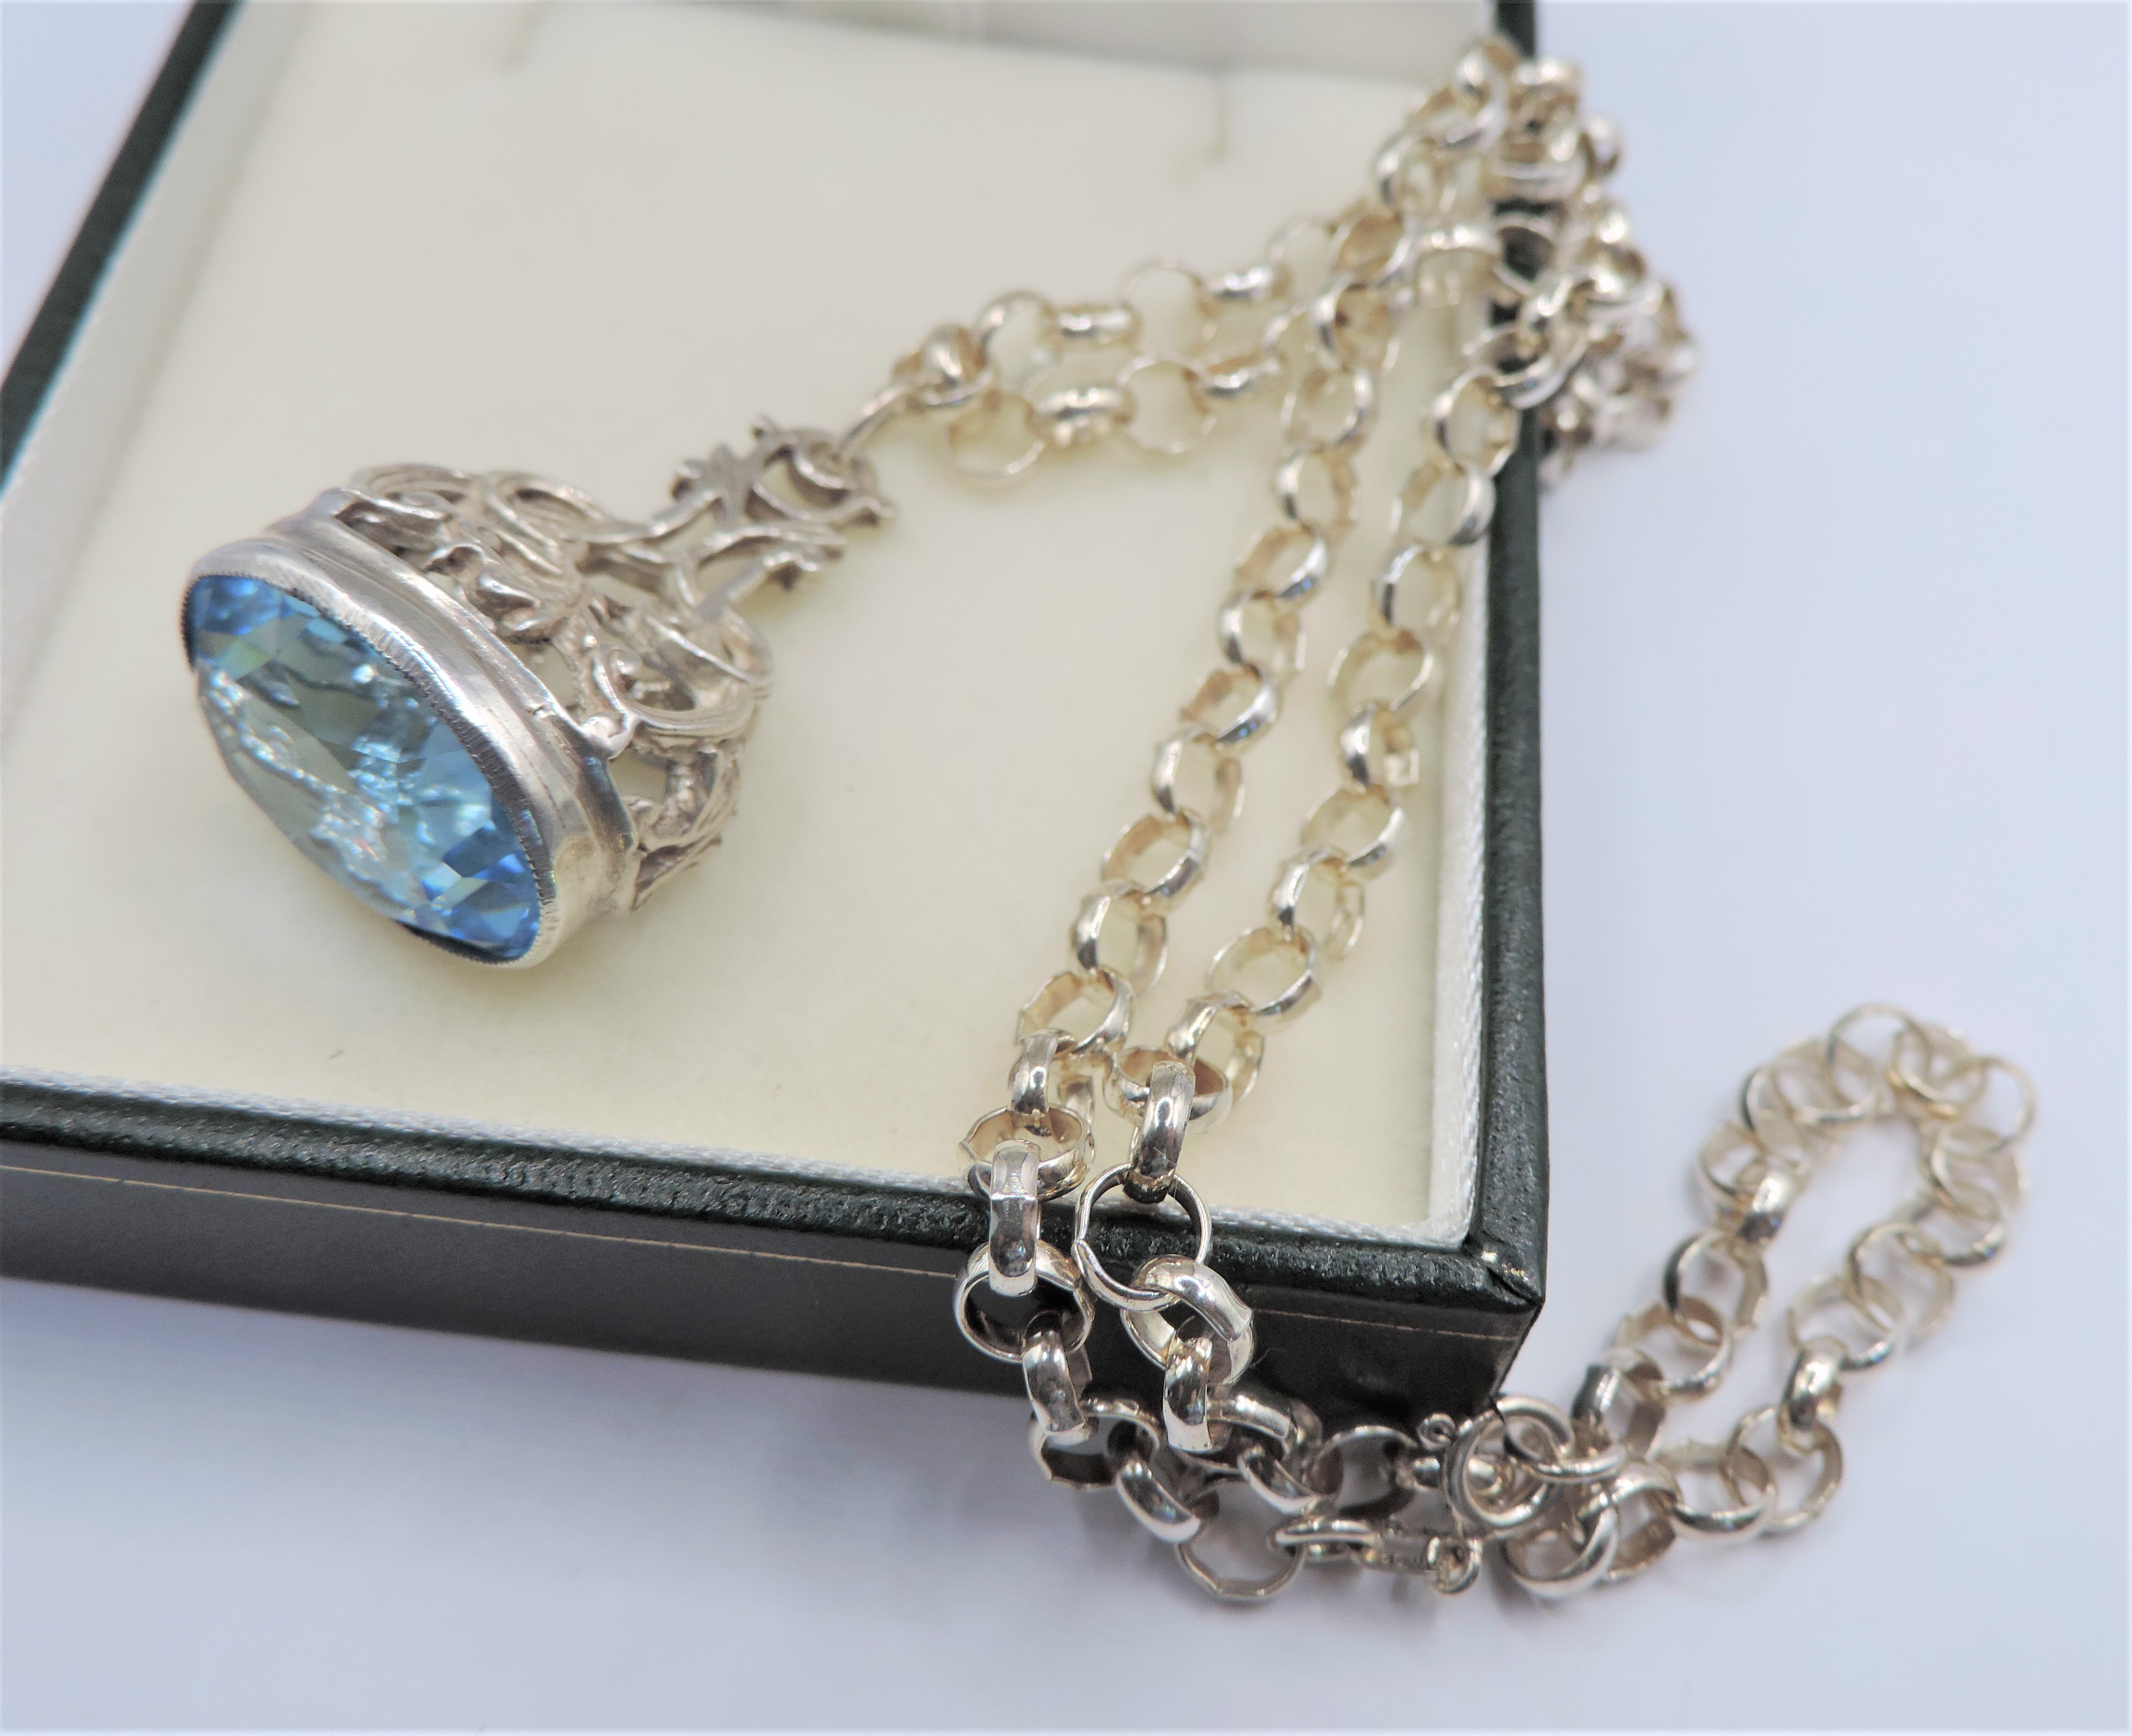 Vintage Sterling Silver Blue Topaz Fob Pendant on Belcher Chain - Image 3 of 4